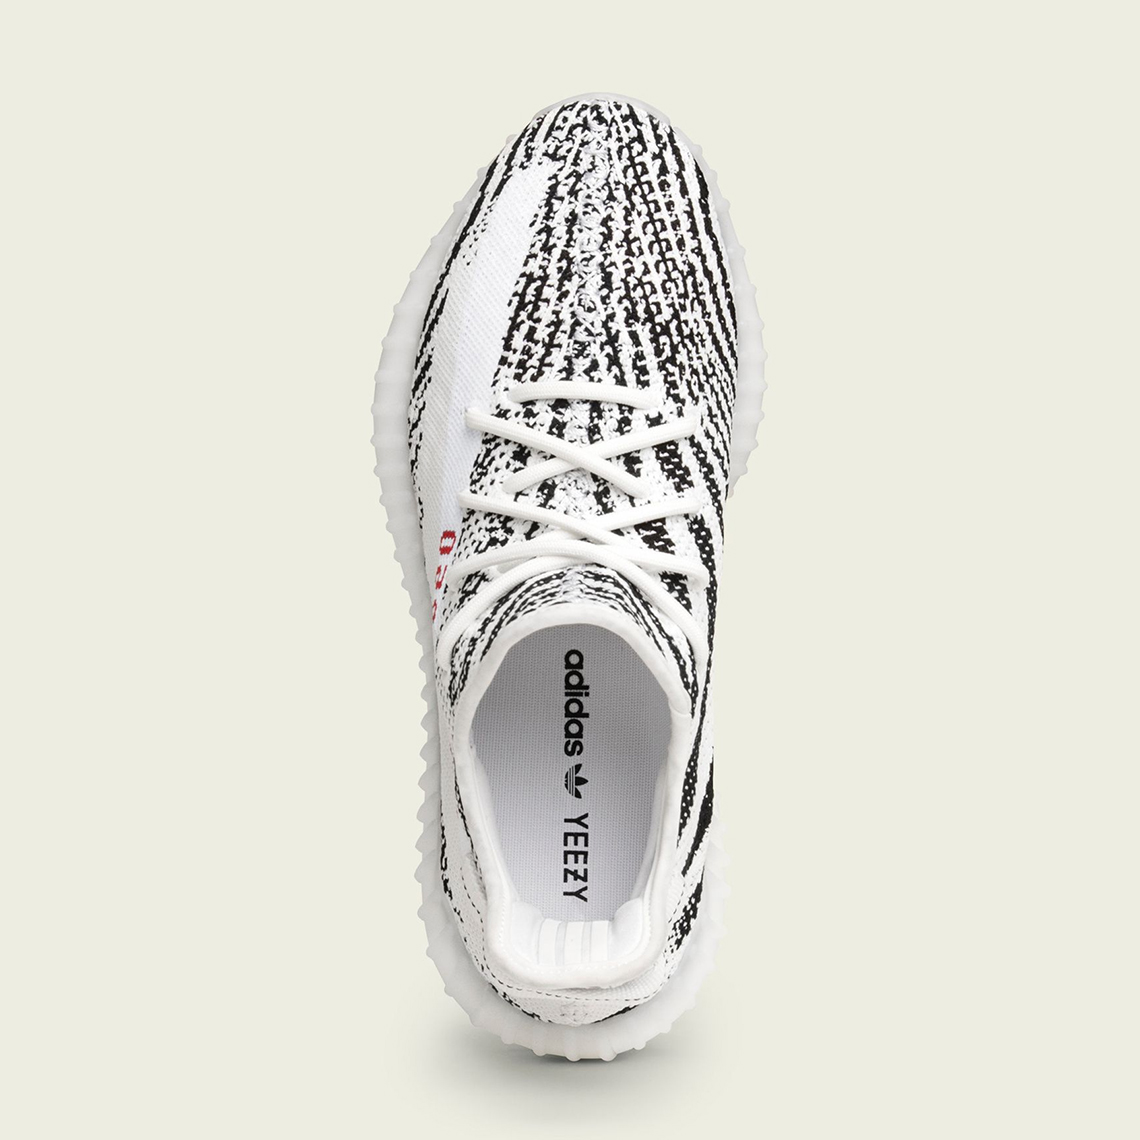 Adidas Yeezy 350 Zebra Release Date Sneakernews Com